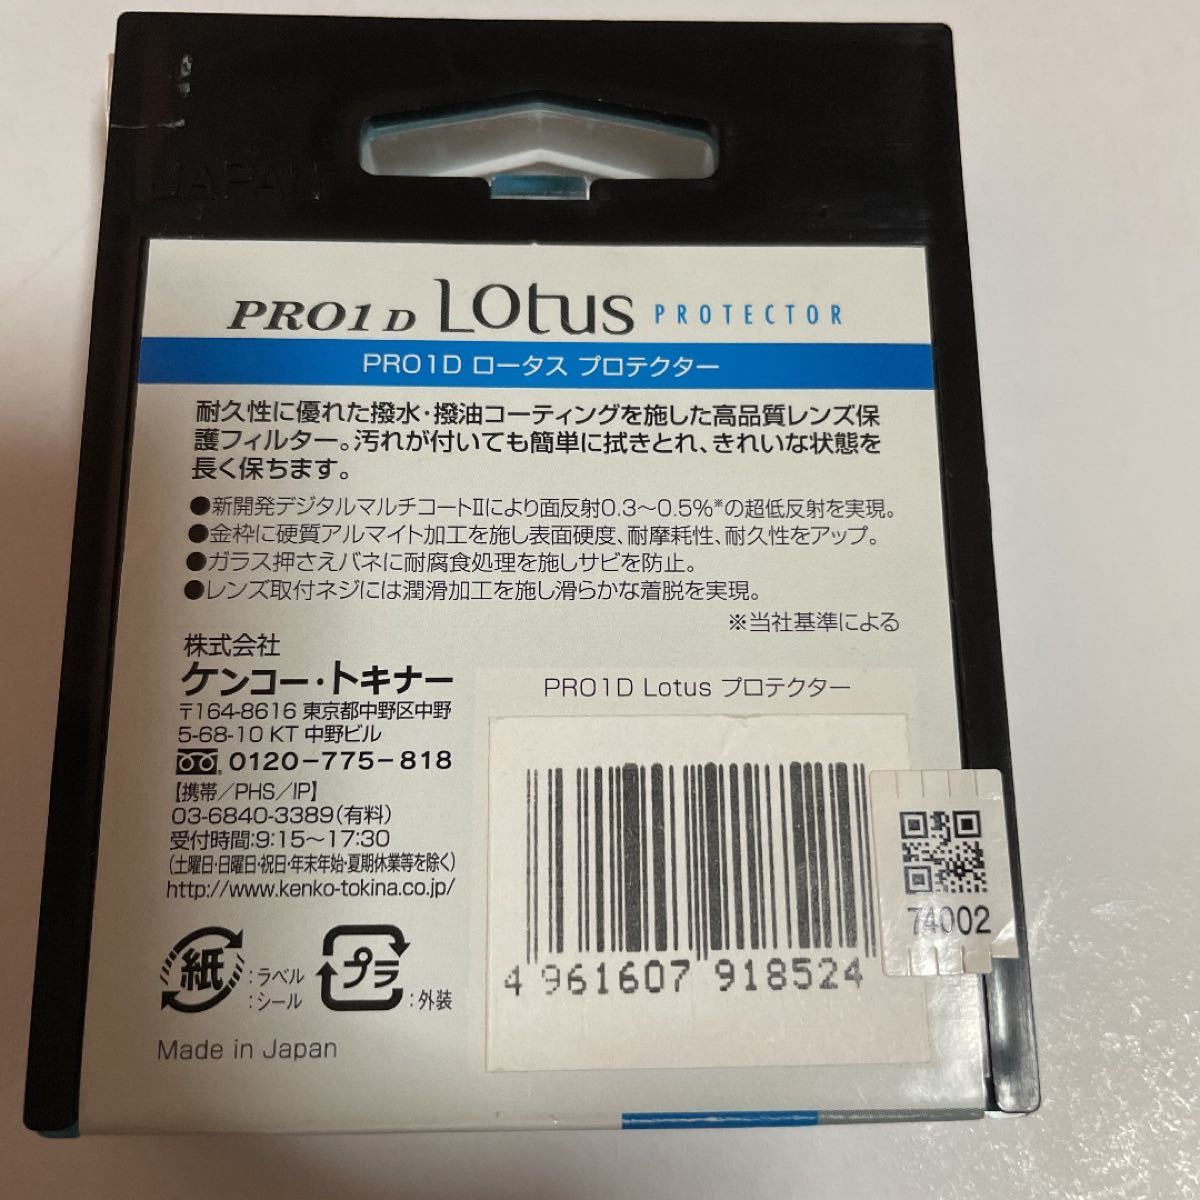 Kenko レンズフィルター PRO1D Lotus プロテクター 58mm レンズ保護用 撥水・撥油コーティング 918524